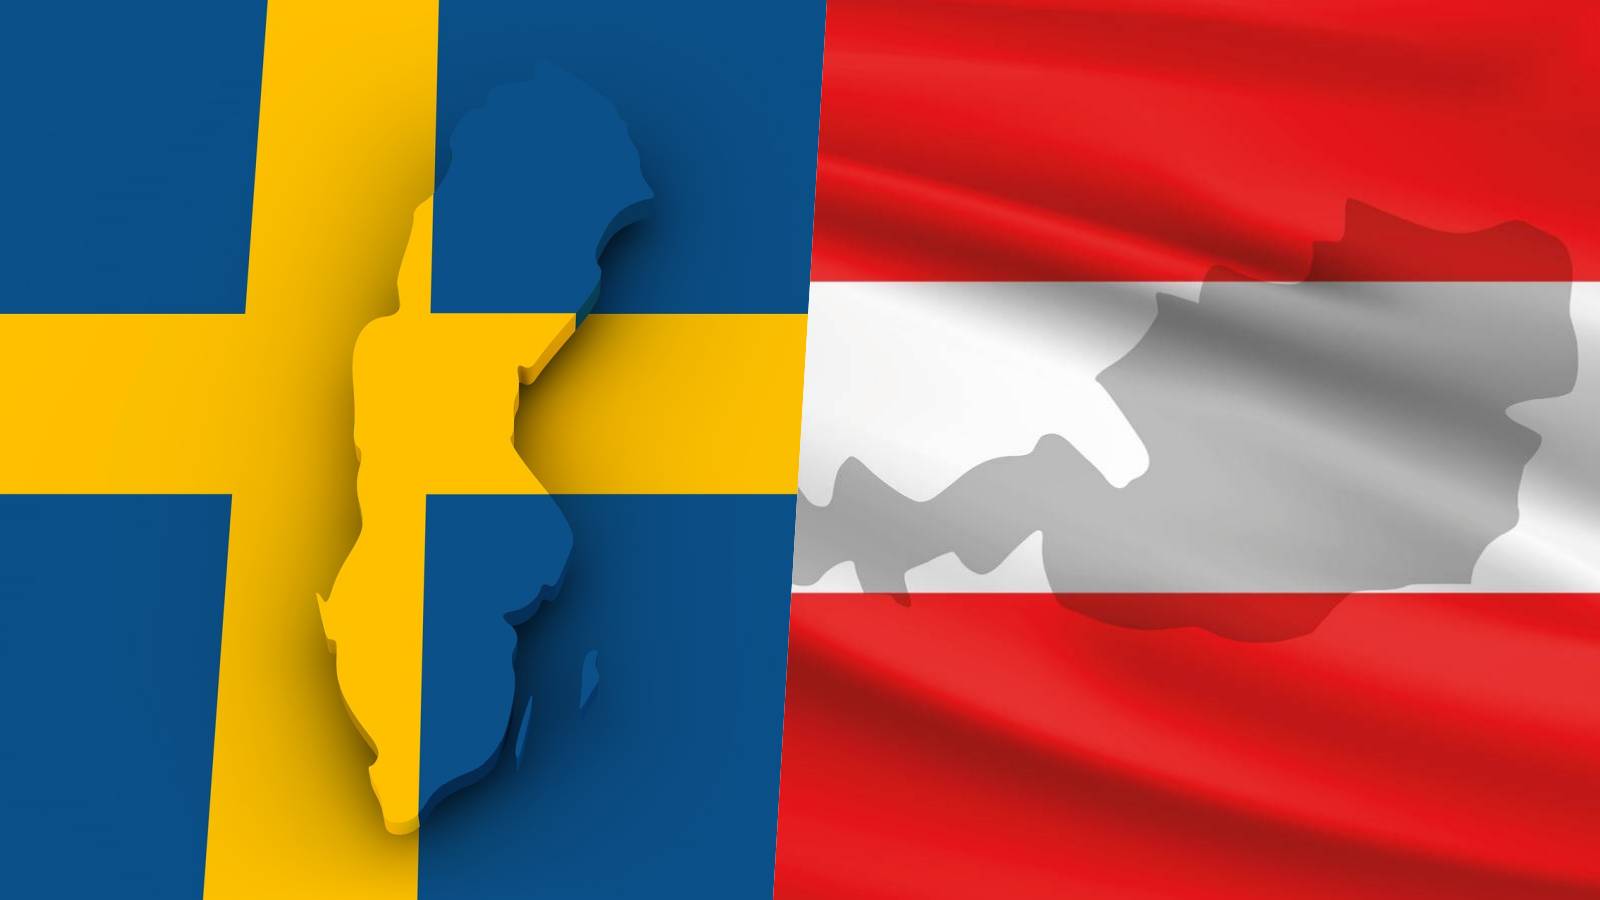 Austria Aided Italy Sweden Last Minute Announcement Preventing Romania's Schengen Accession